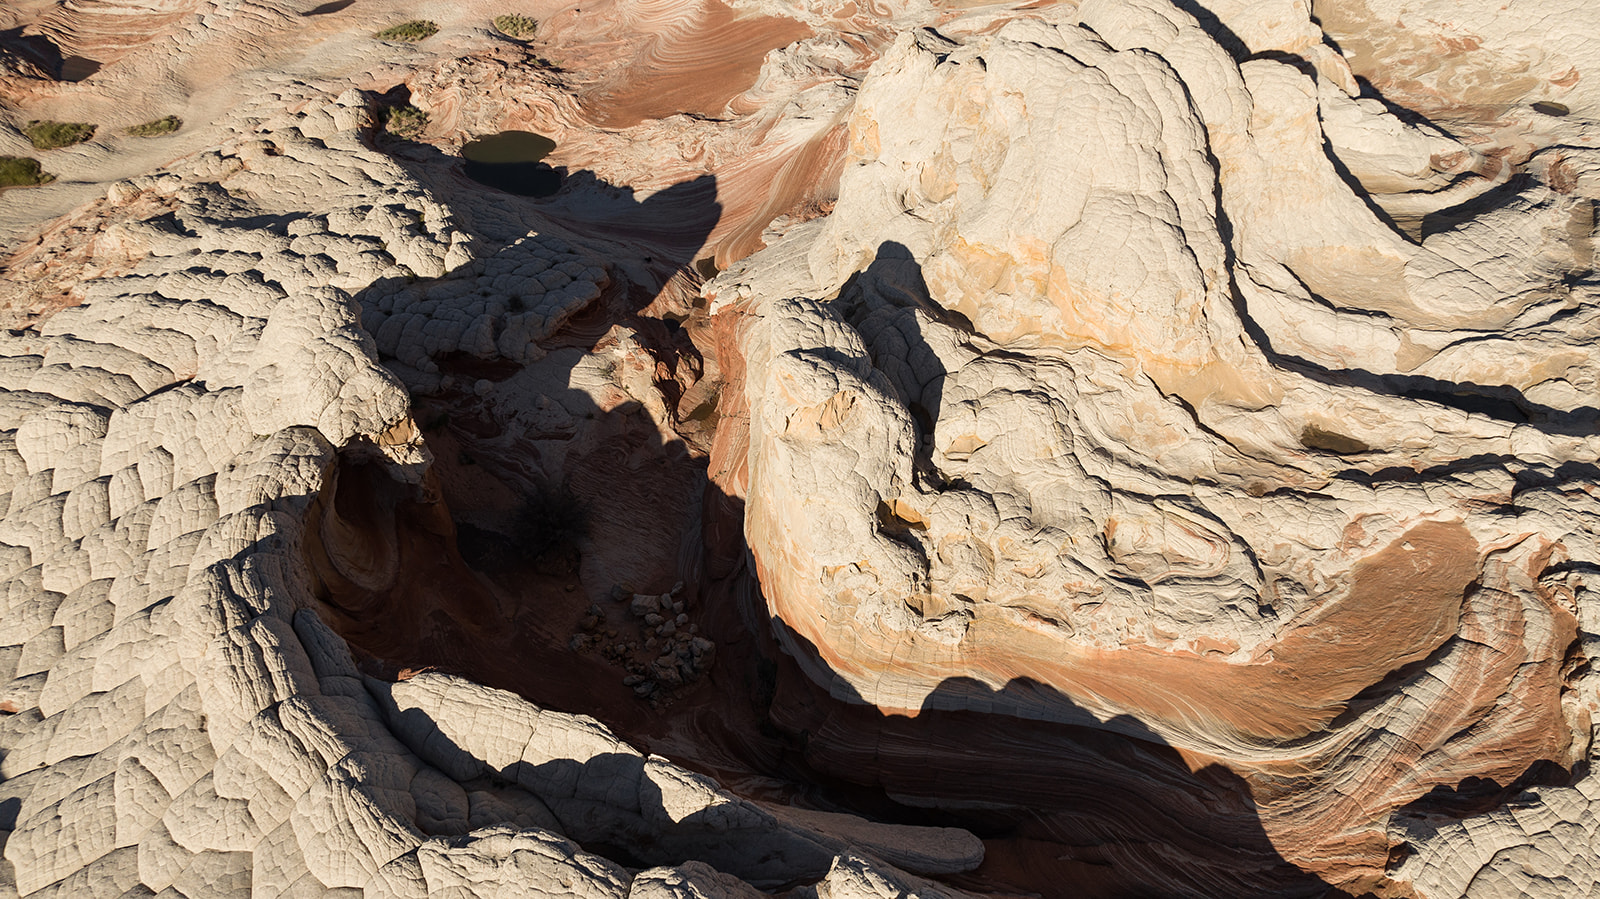 Sandstone formations, White Pocket, Arizona, elopement location, stunning backdrop, photography